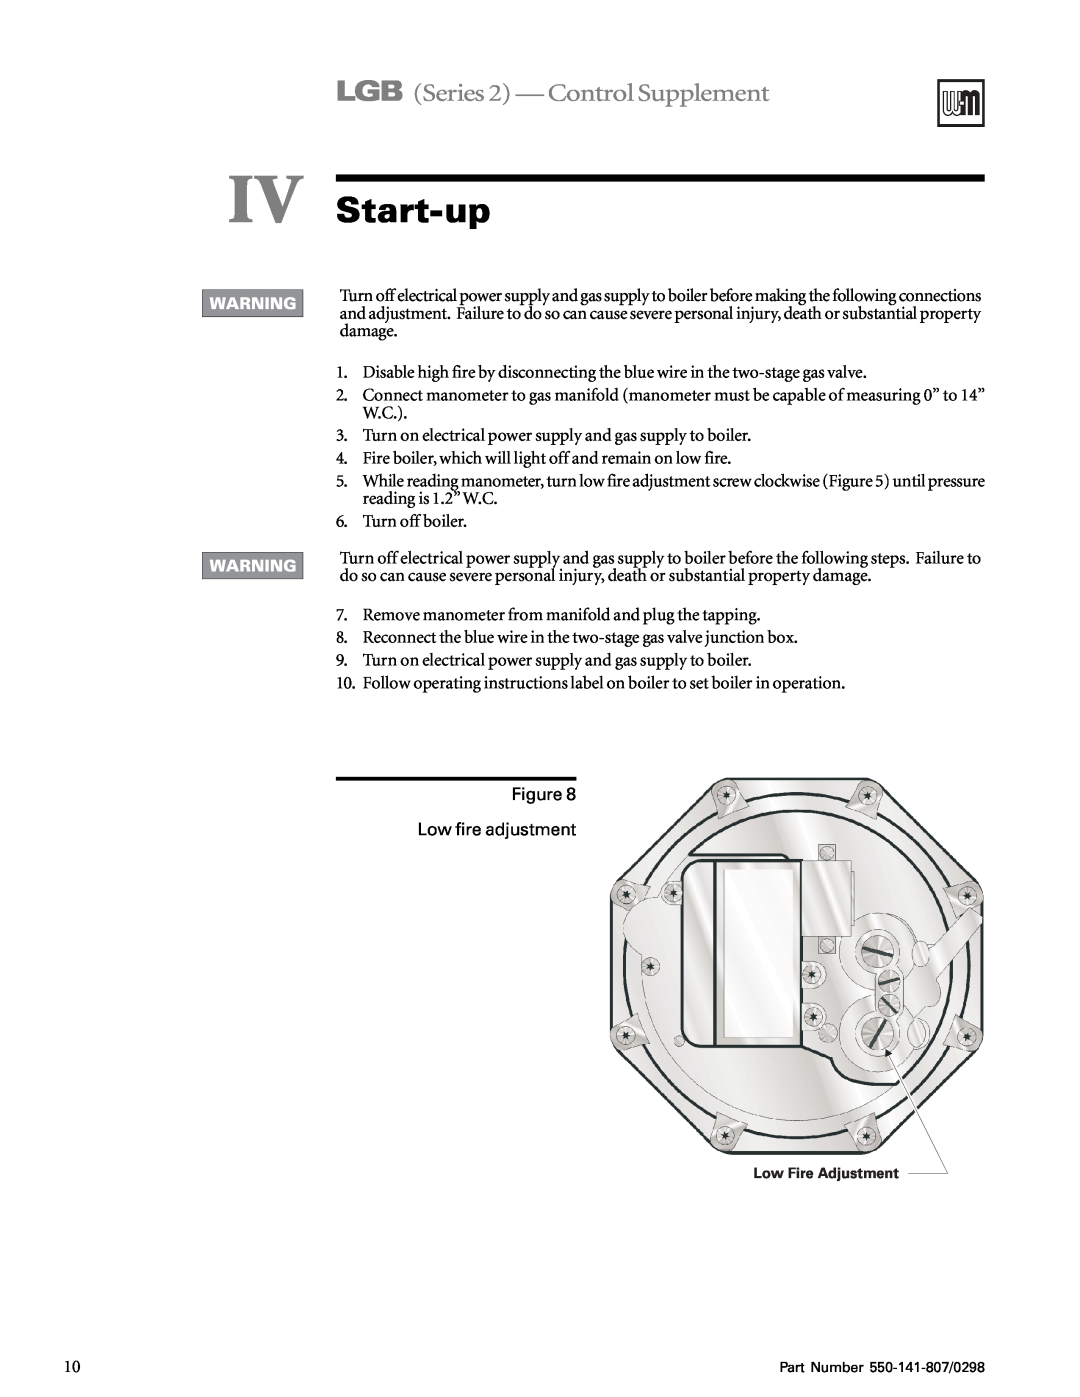 Weil-McLain WMBC-1A manual IV Start-up, LGB Series 2 - Control Supplement 